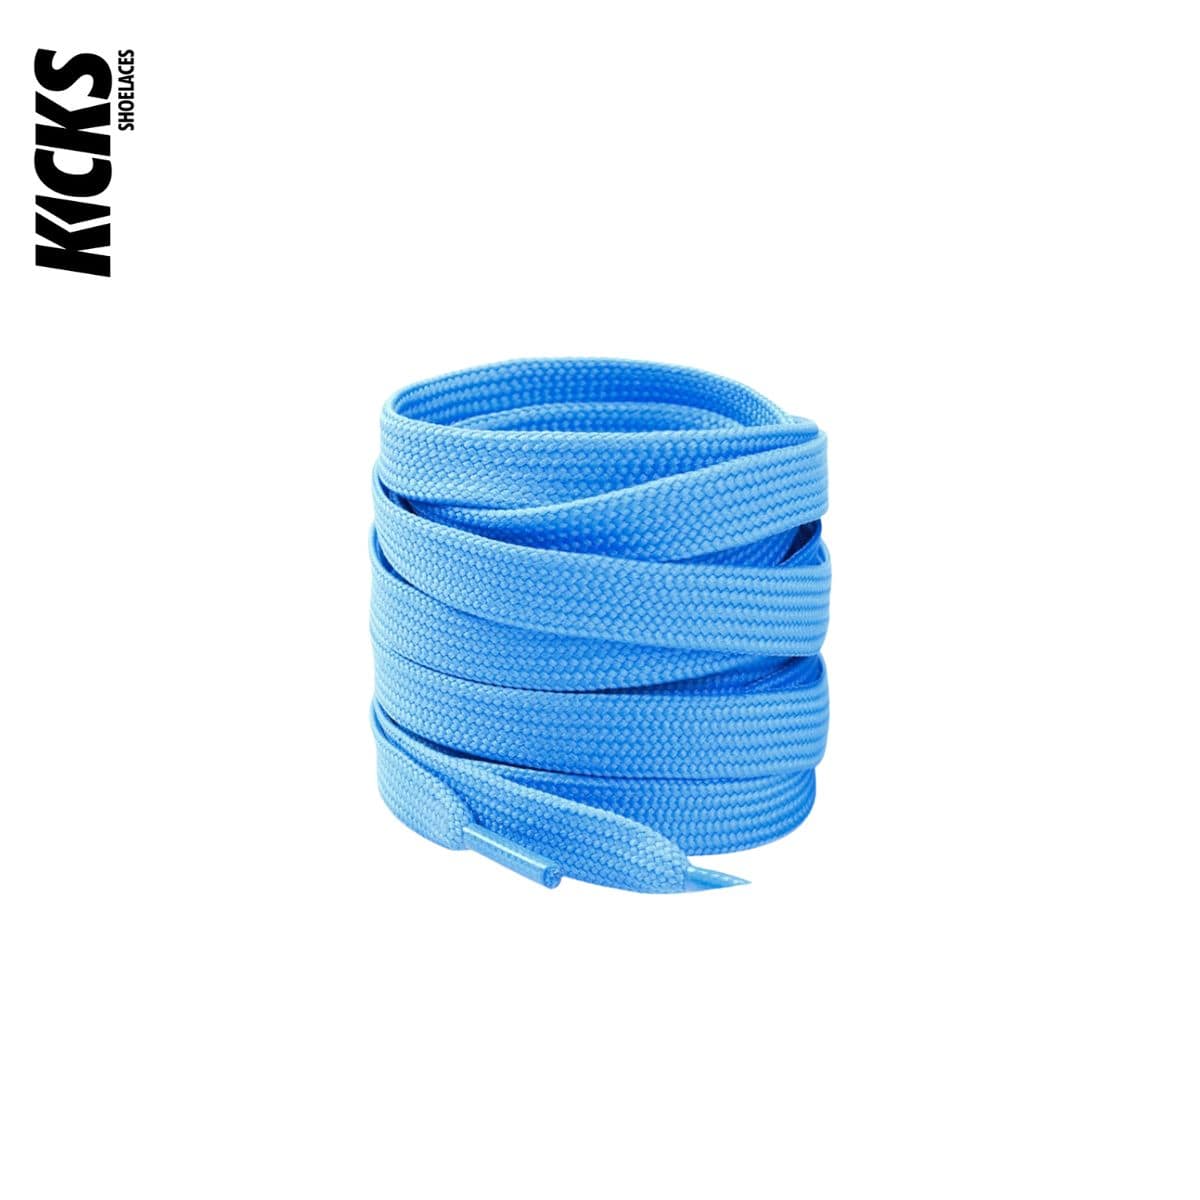 Nike Dunks Shoelace Replacements - Kicks Shoelaces